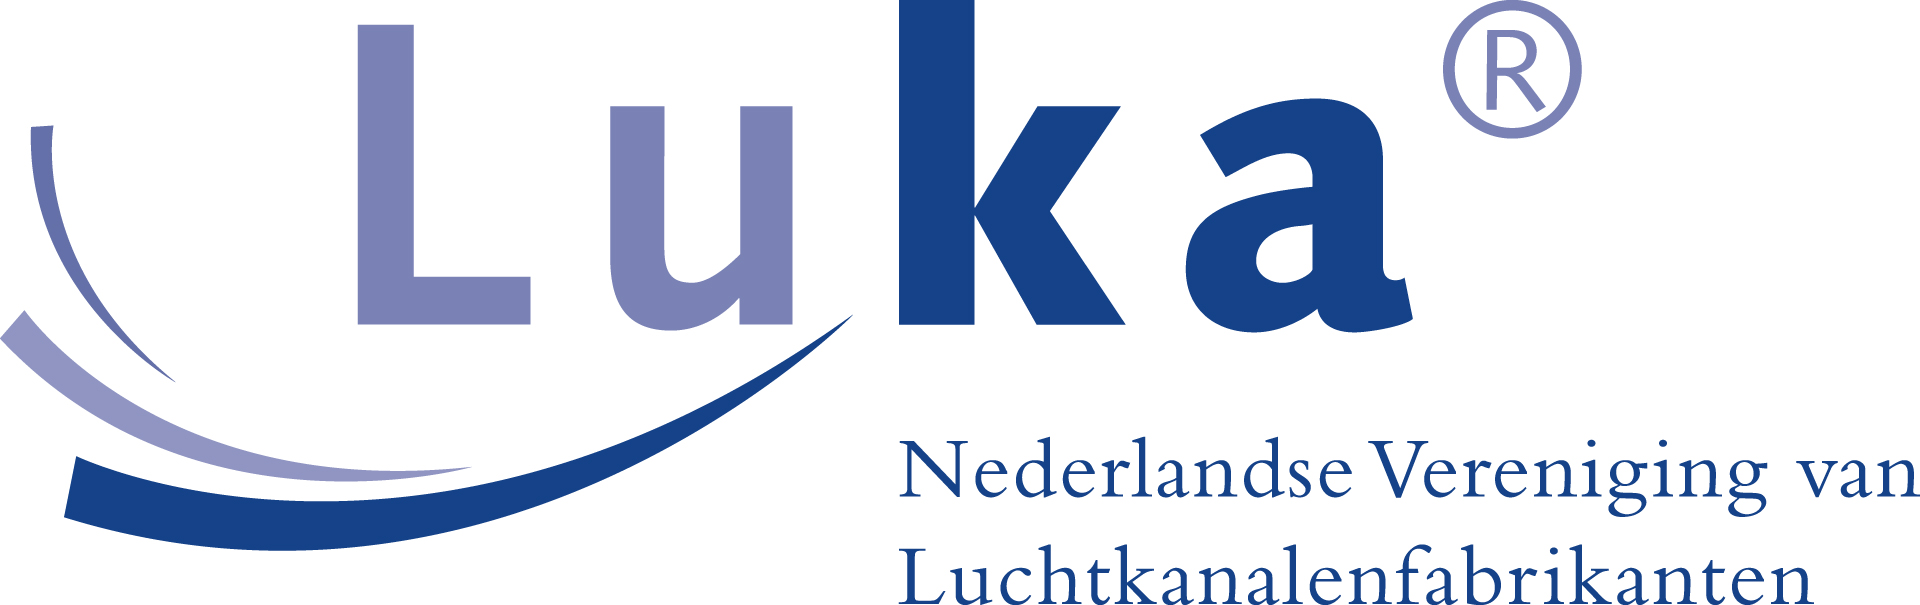 LUKA Nederlandse Vereniging van Luchtkanalenfabrikanten